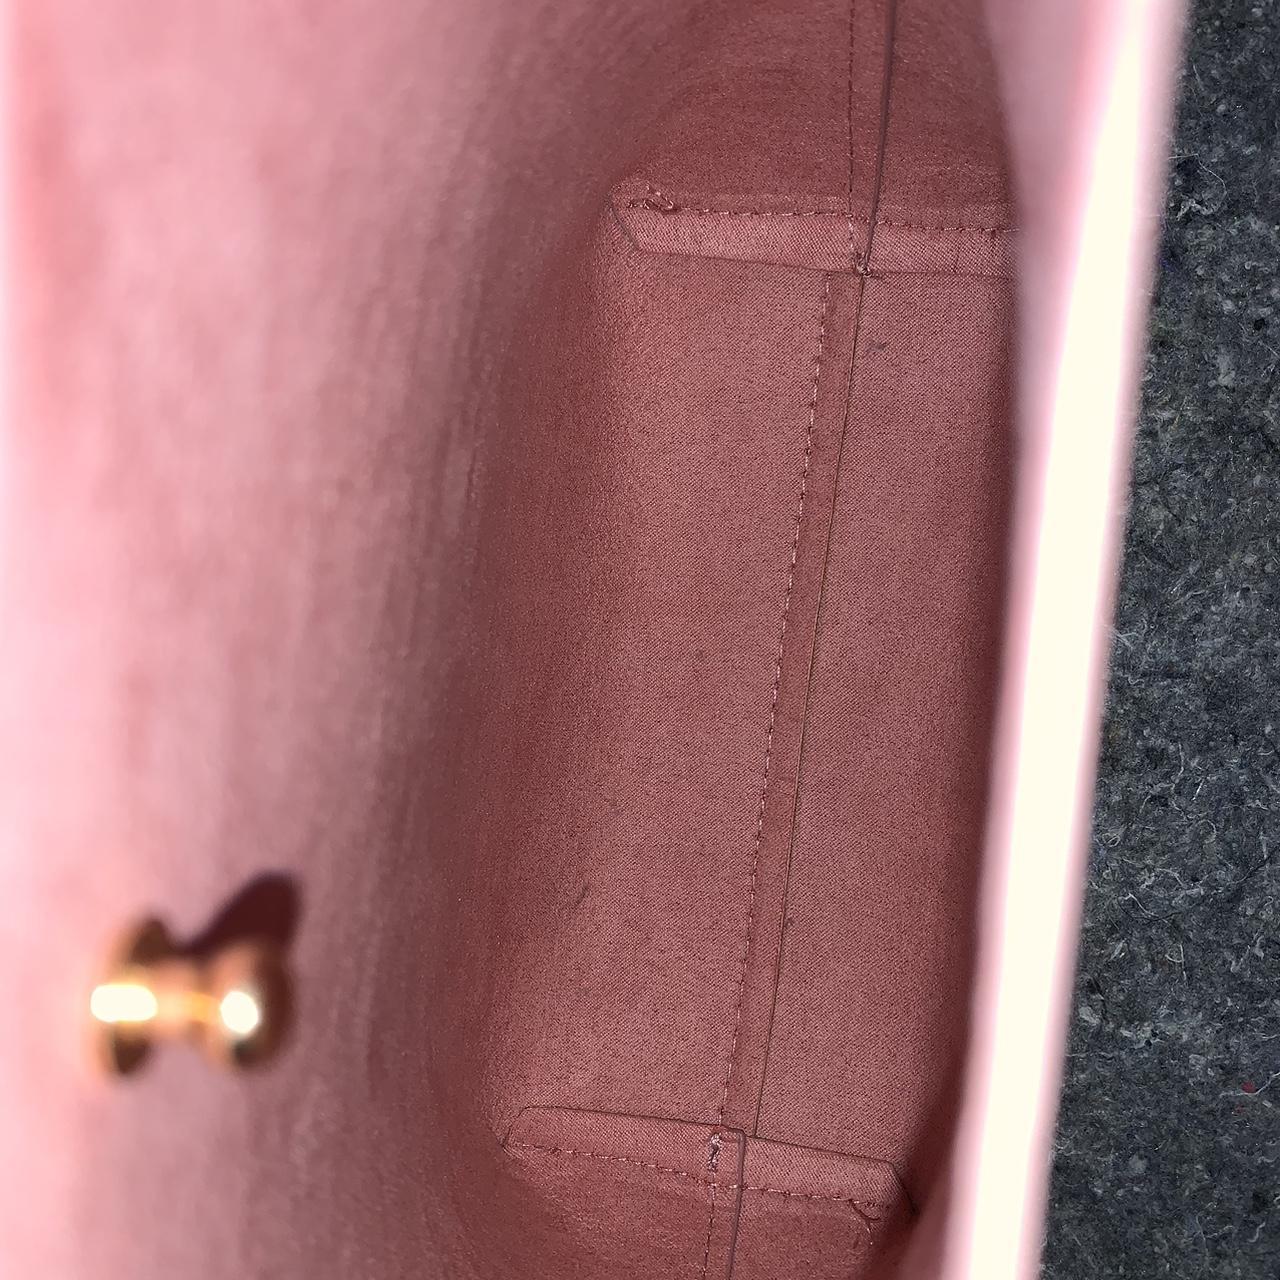 Samara Medium Shoulder Bag Peony/Dirty Pink